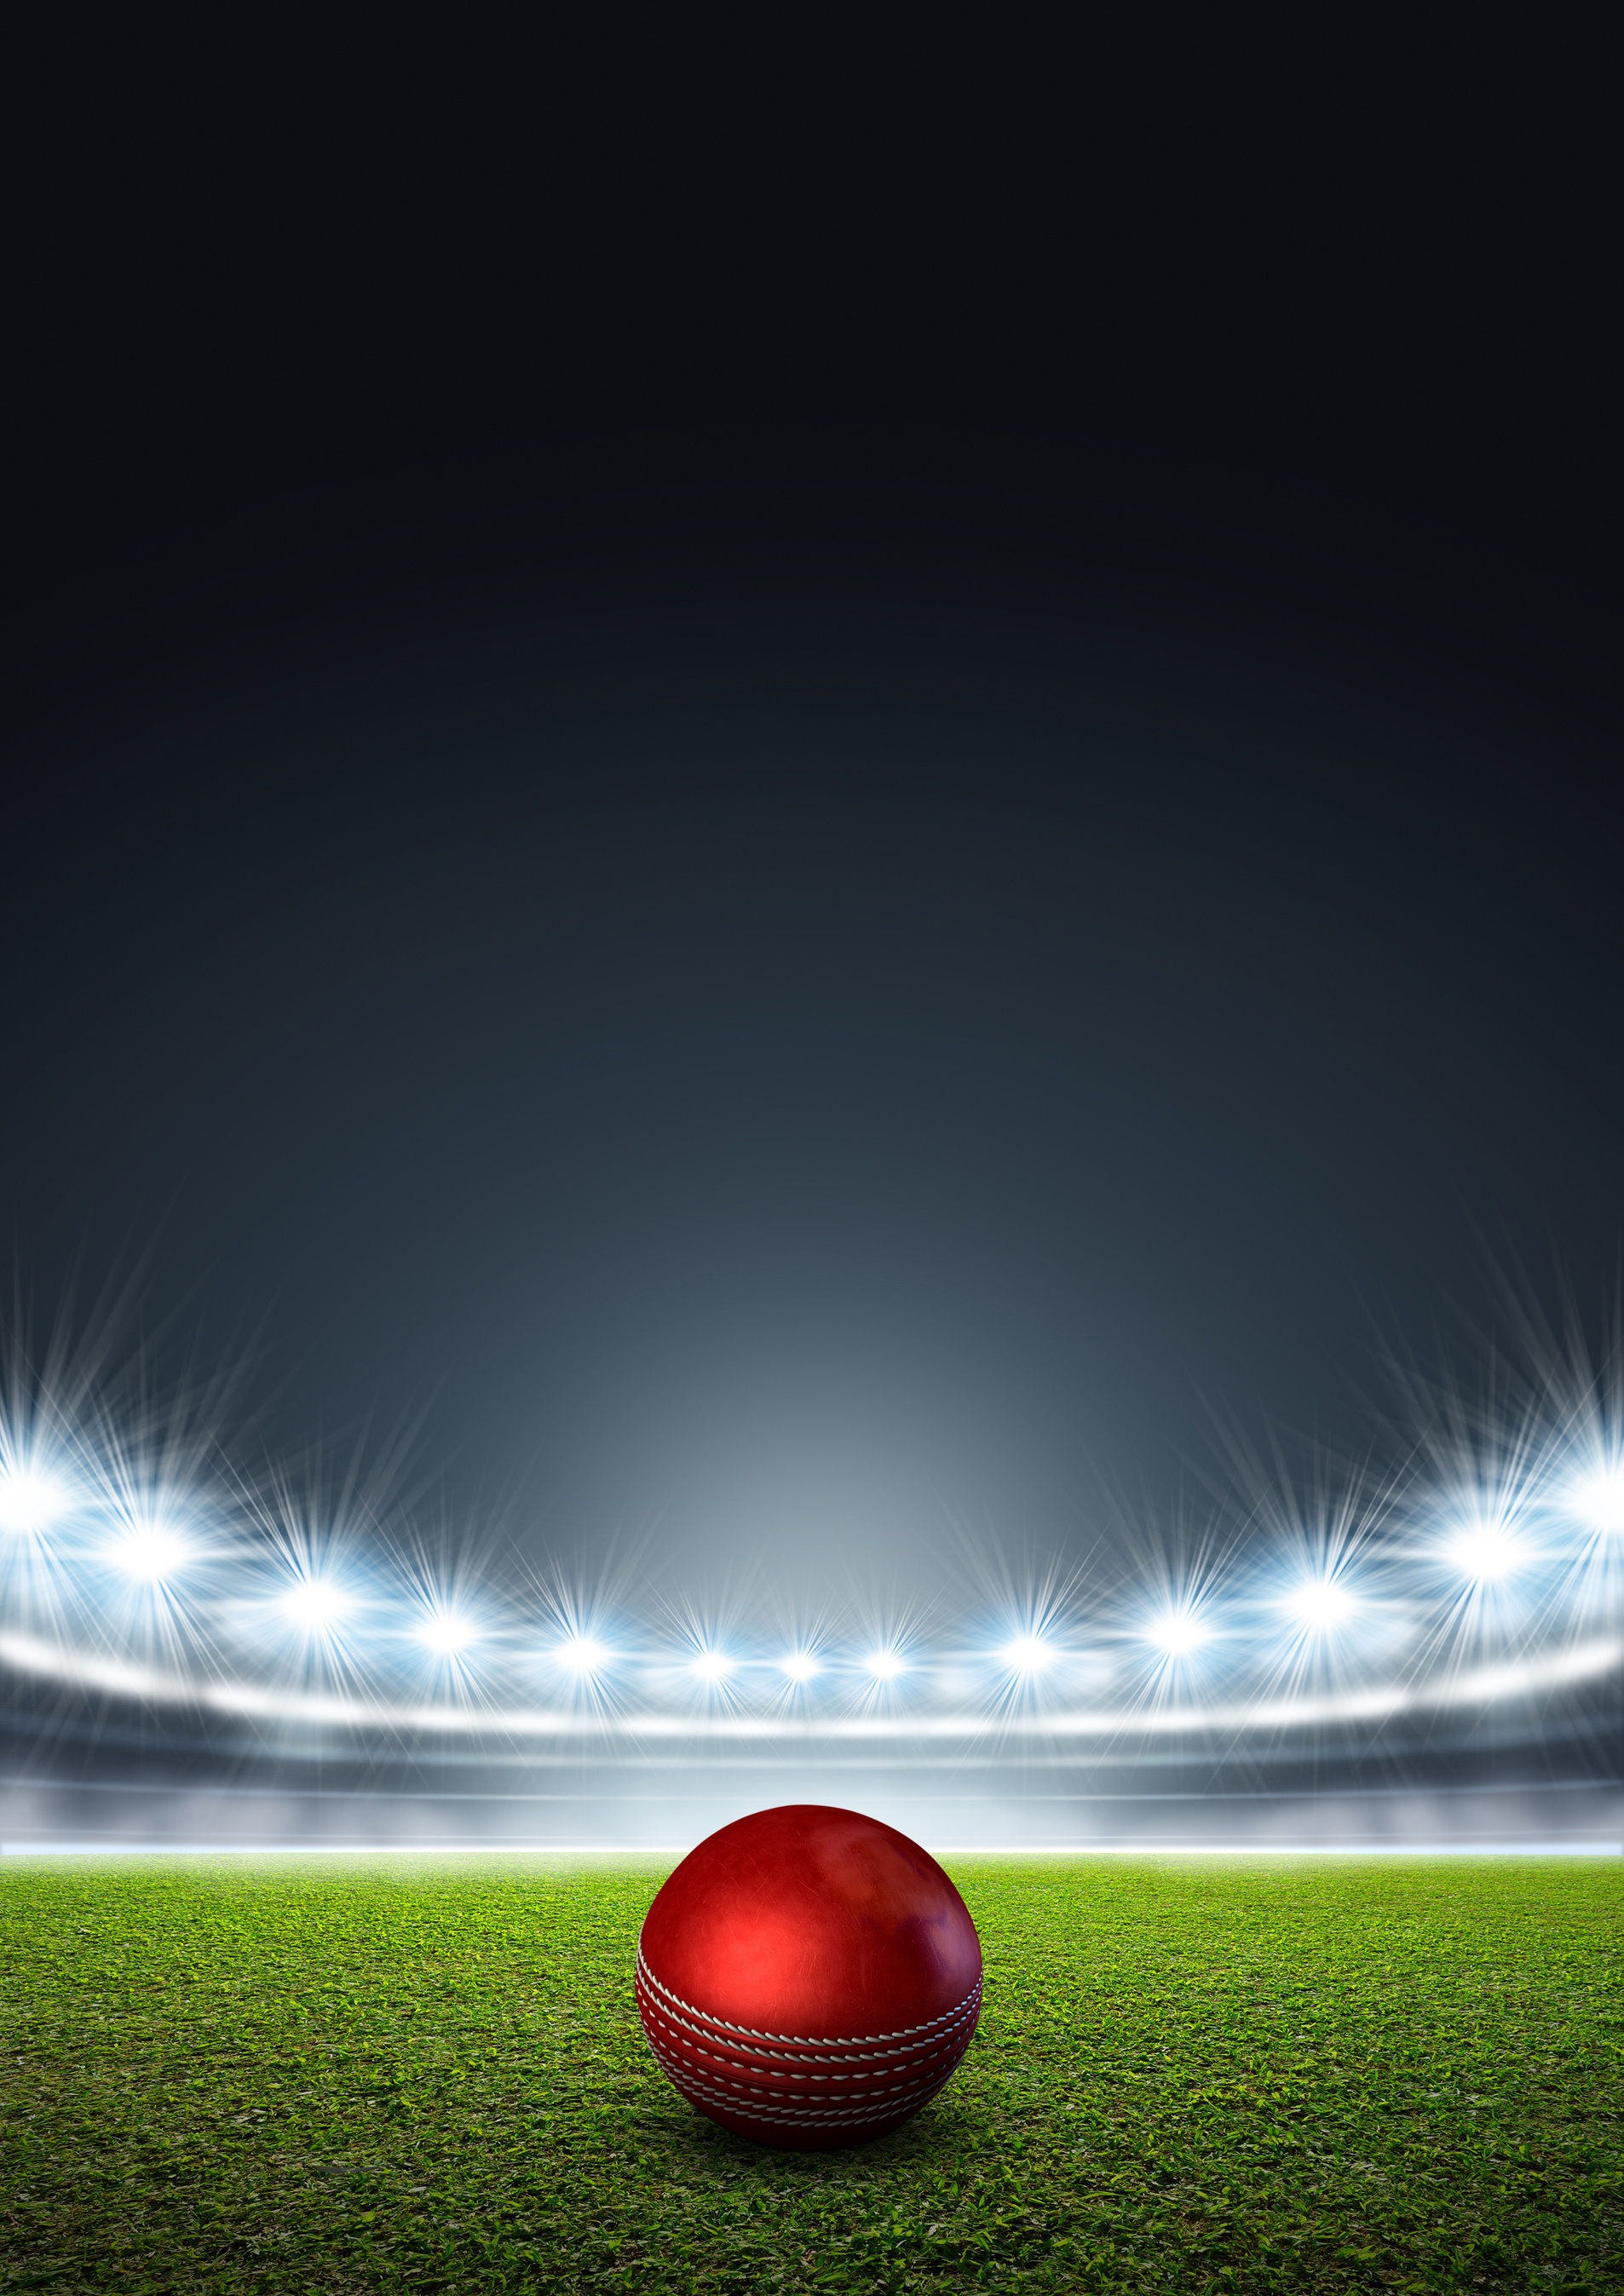 Generic Floodlit Stadium With Cricket Ball